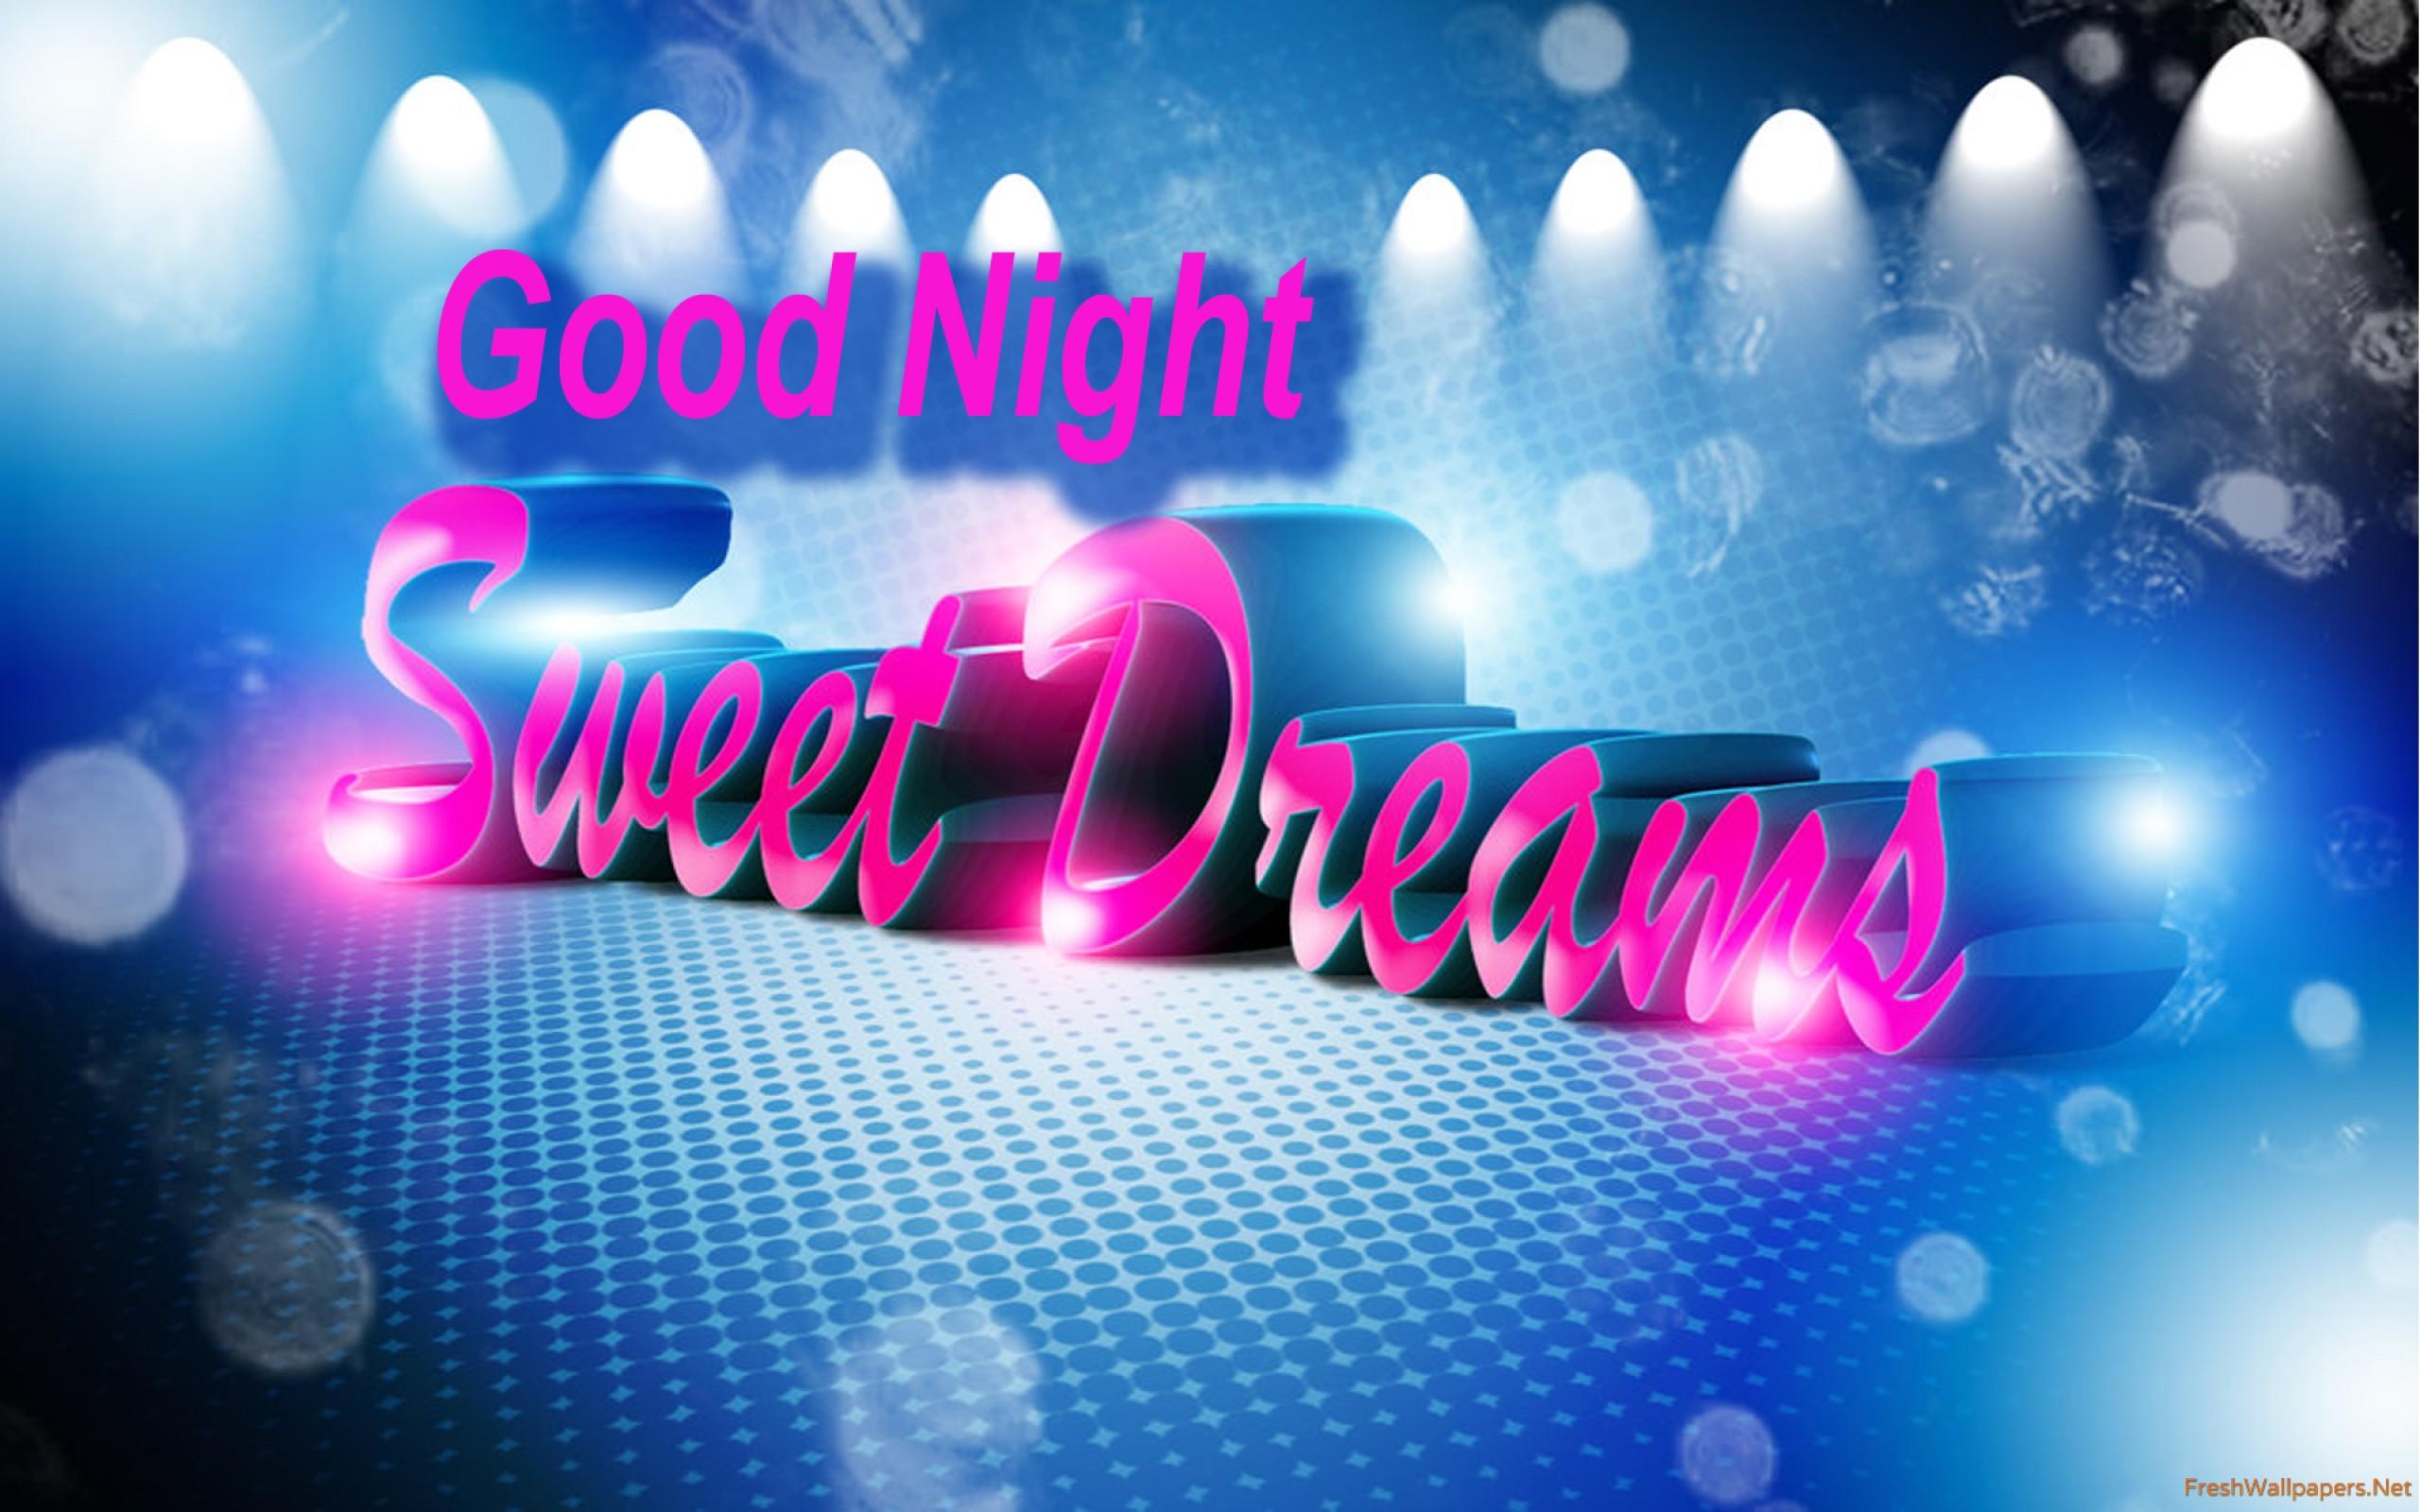 Good night sweet dreams wallpaper